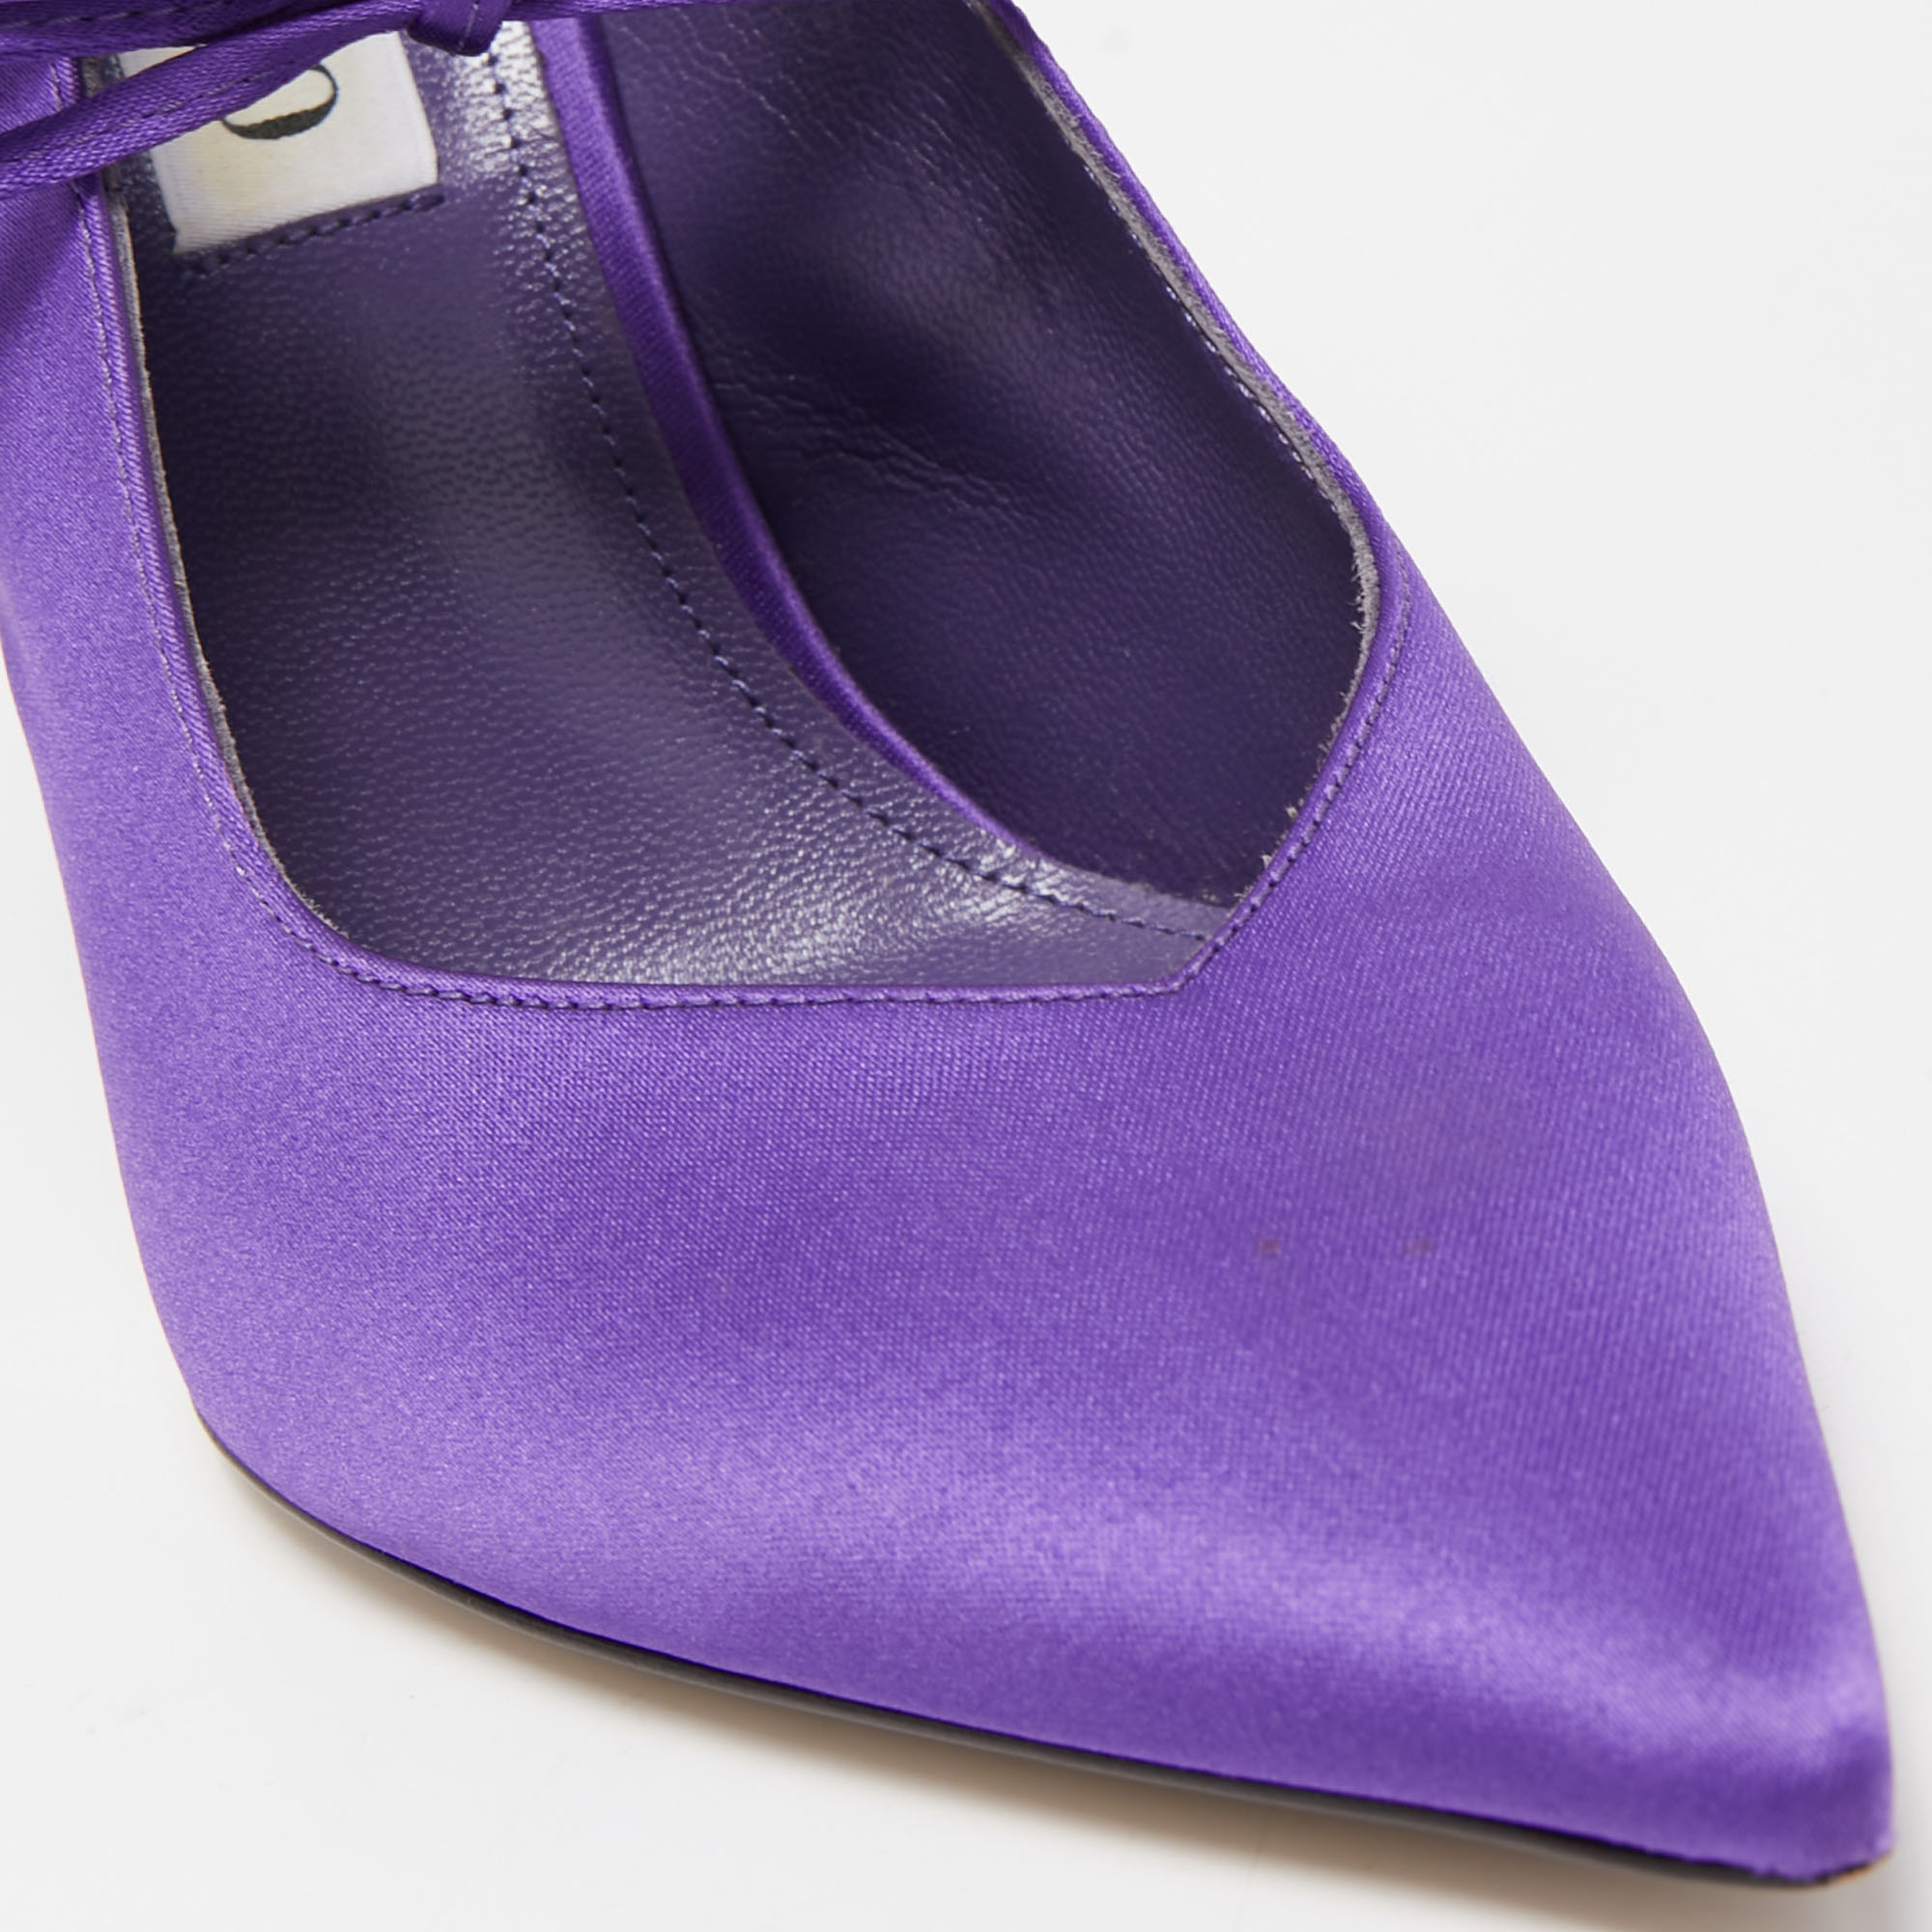 The Attico Purple Satin Venus Slingback Ankle Tie Pumps Size 37.5